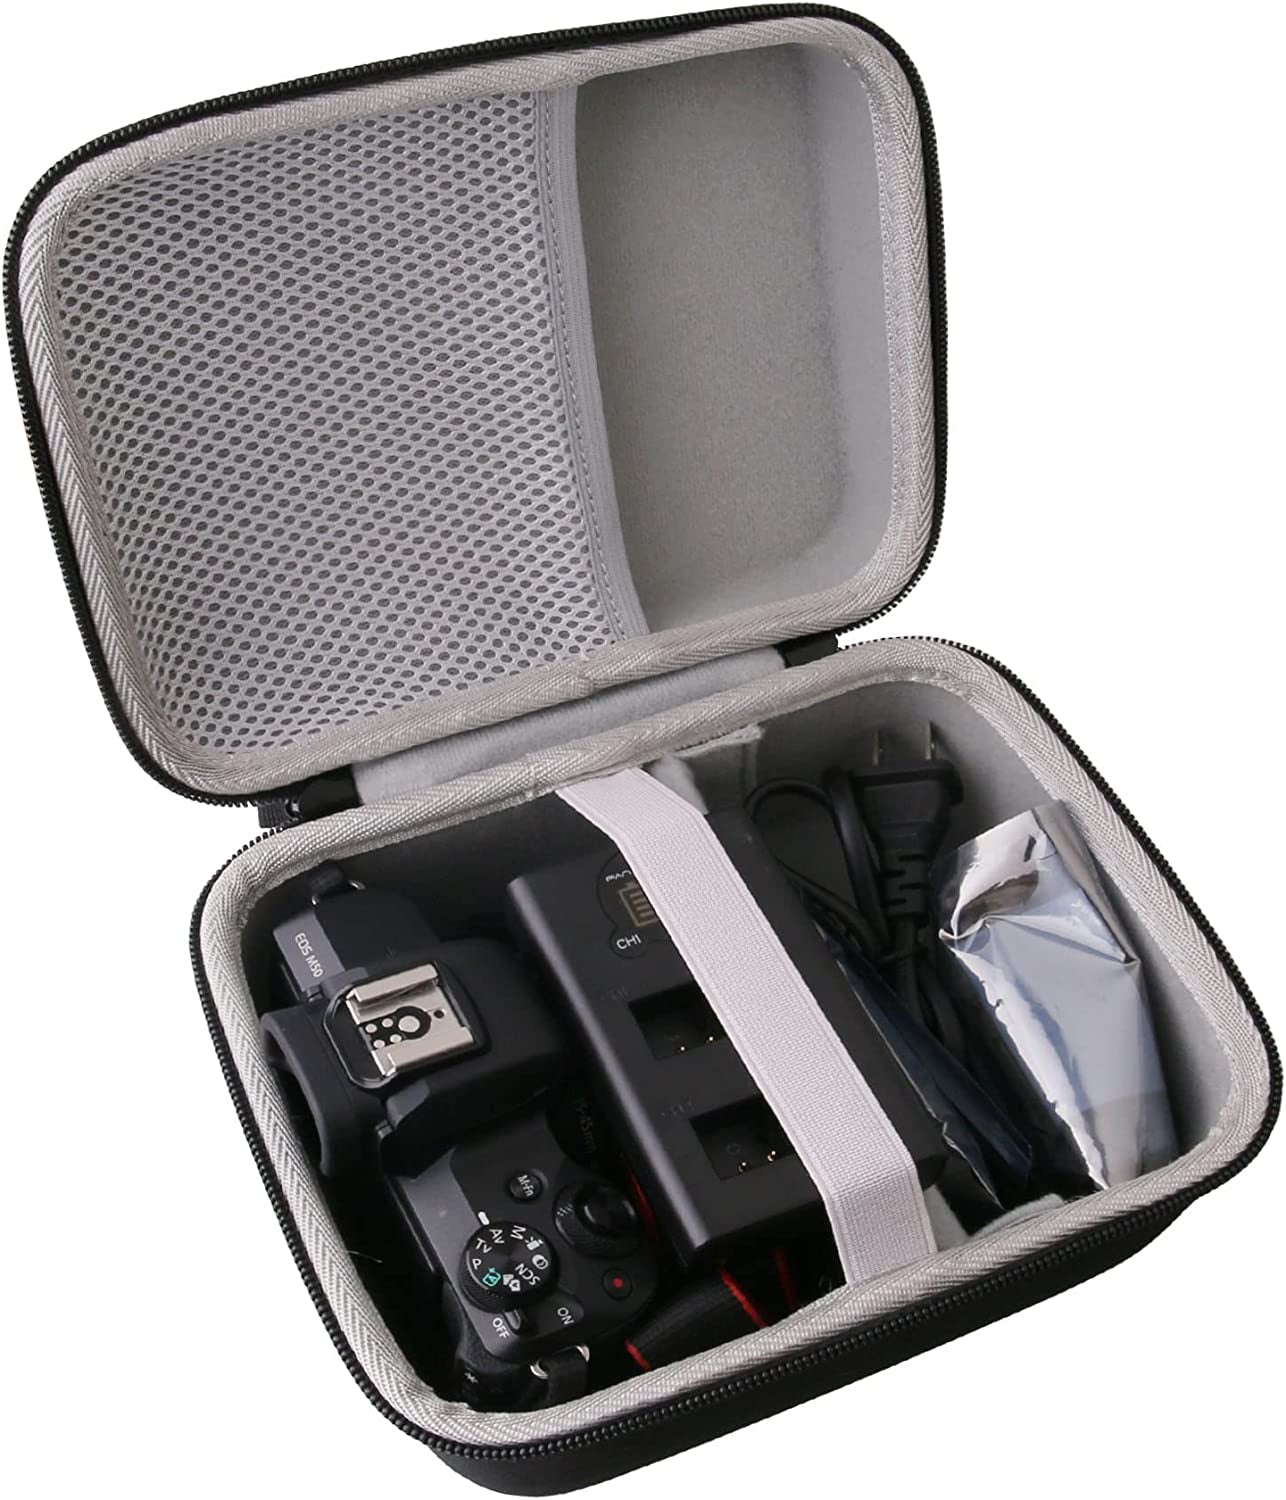 Hard Carrying Case Compatible with Nikon COOLPIX B500/B600/B700 Digital Camera